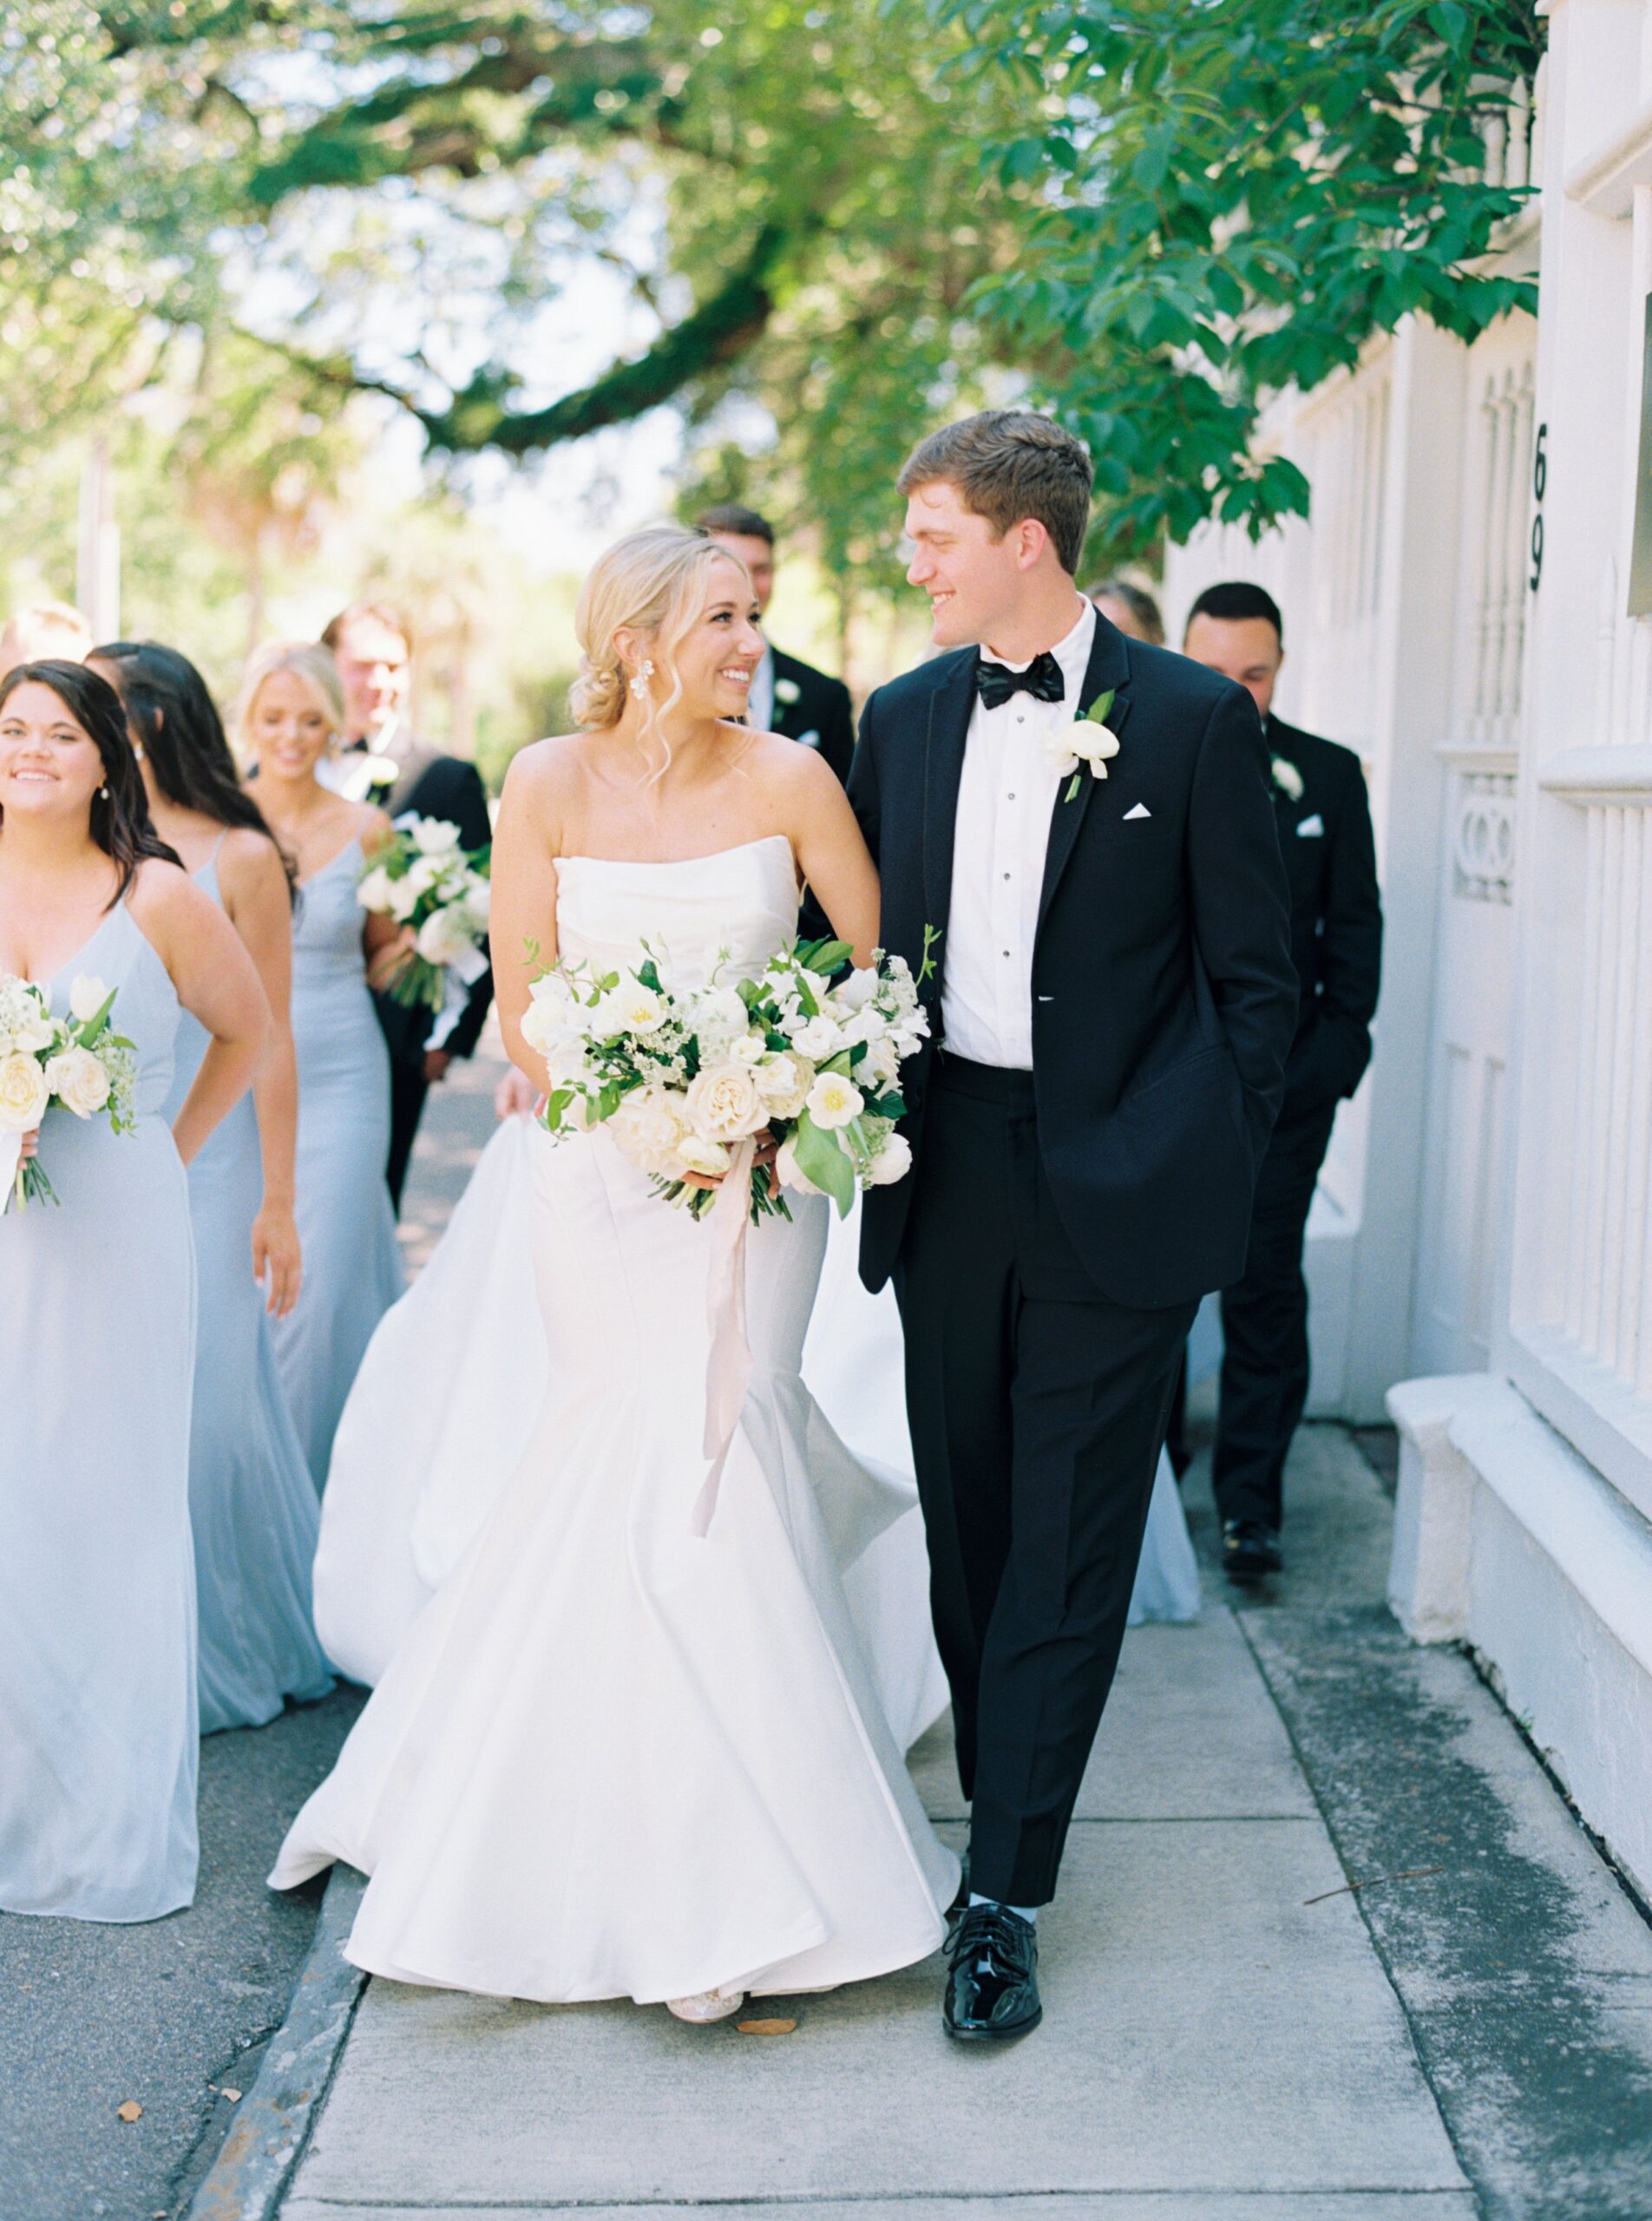 Charleston wedding film photographer. Bride and groom walking on sidewalk with white fence and greenery.